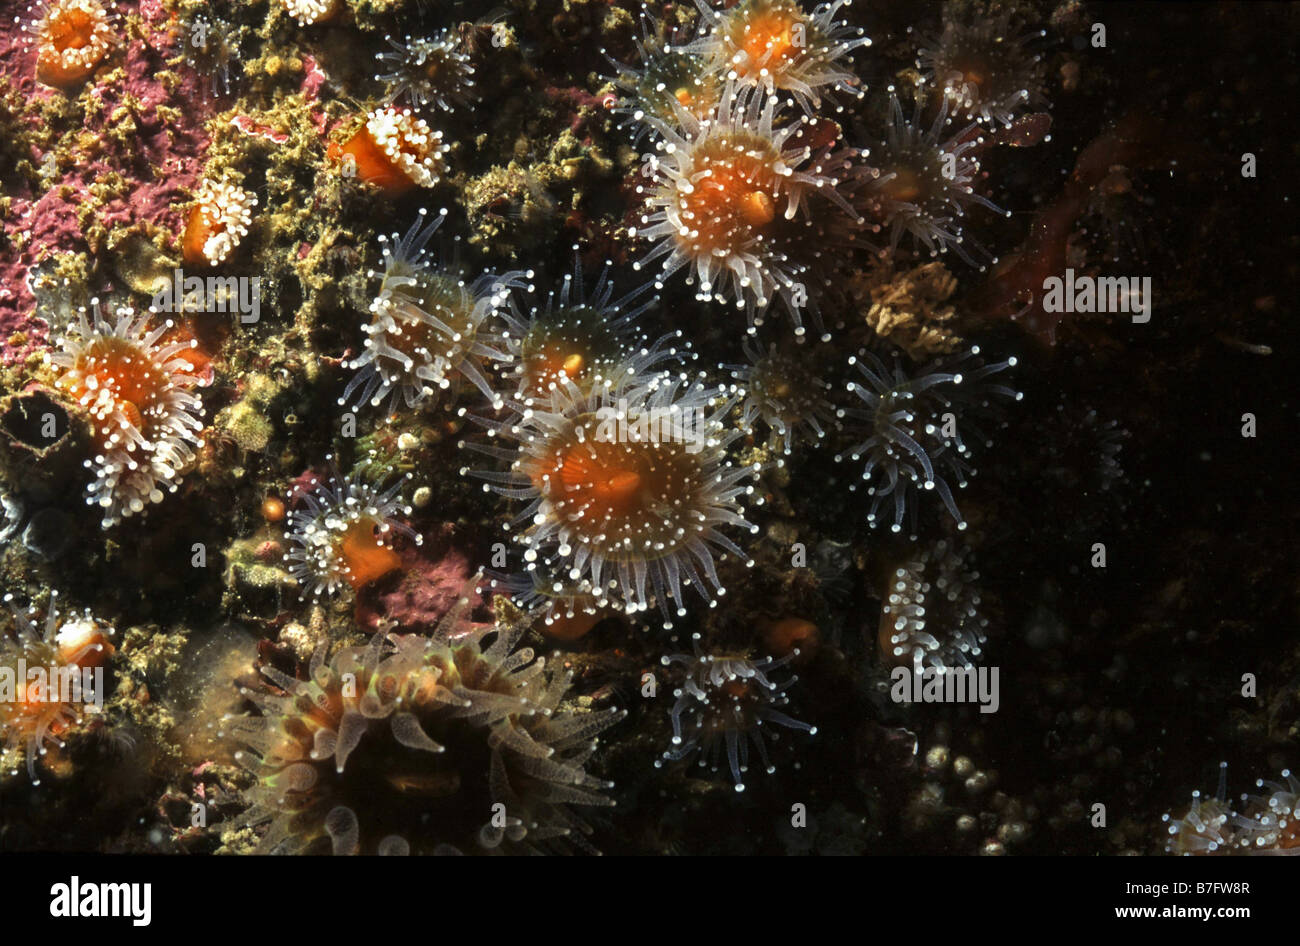 Strawberry anemones, Corynactis californica, Monterey breakwater, California Stock Photo